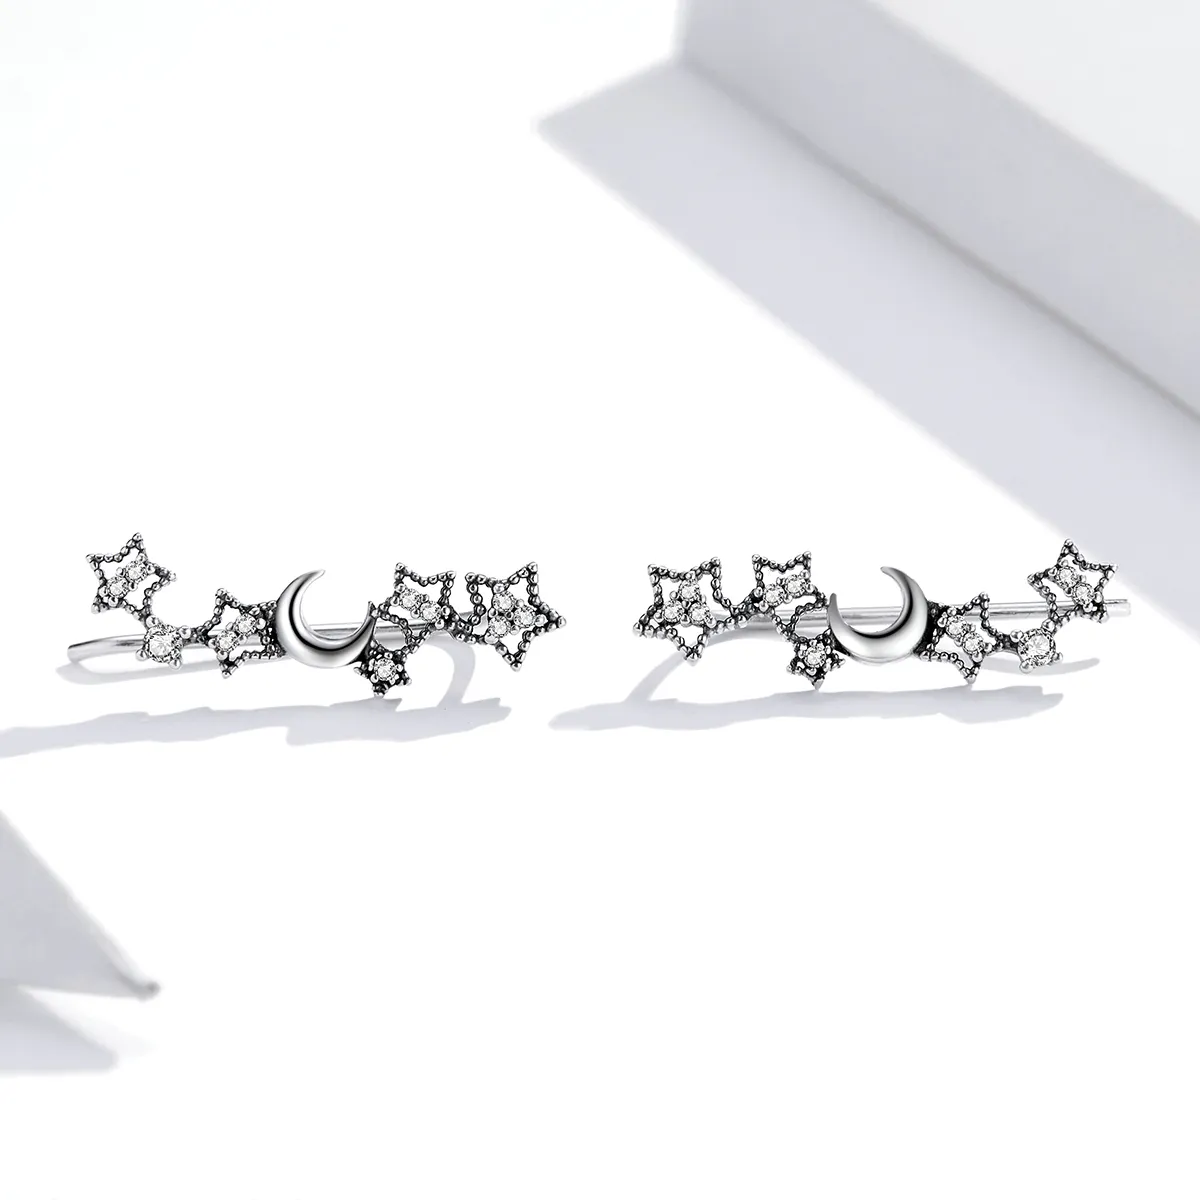 Pandora Style Silver Stars And Moon Stud Earrings - SCE926